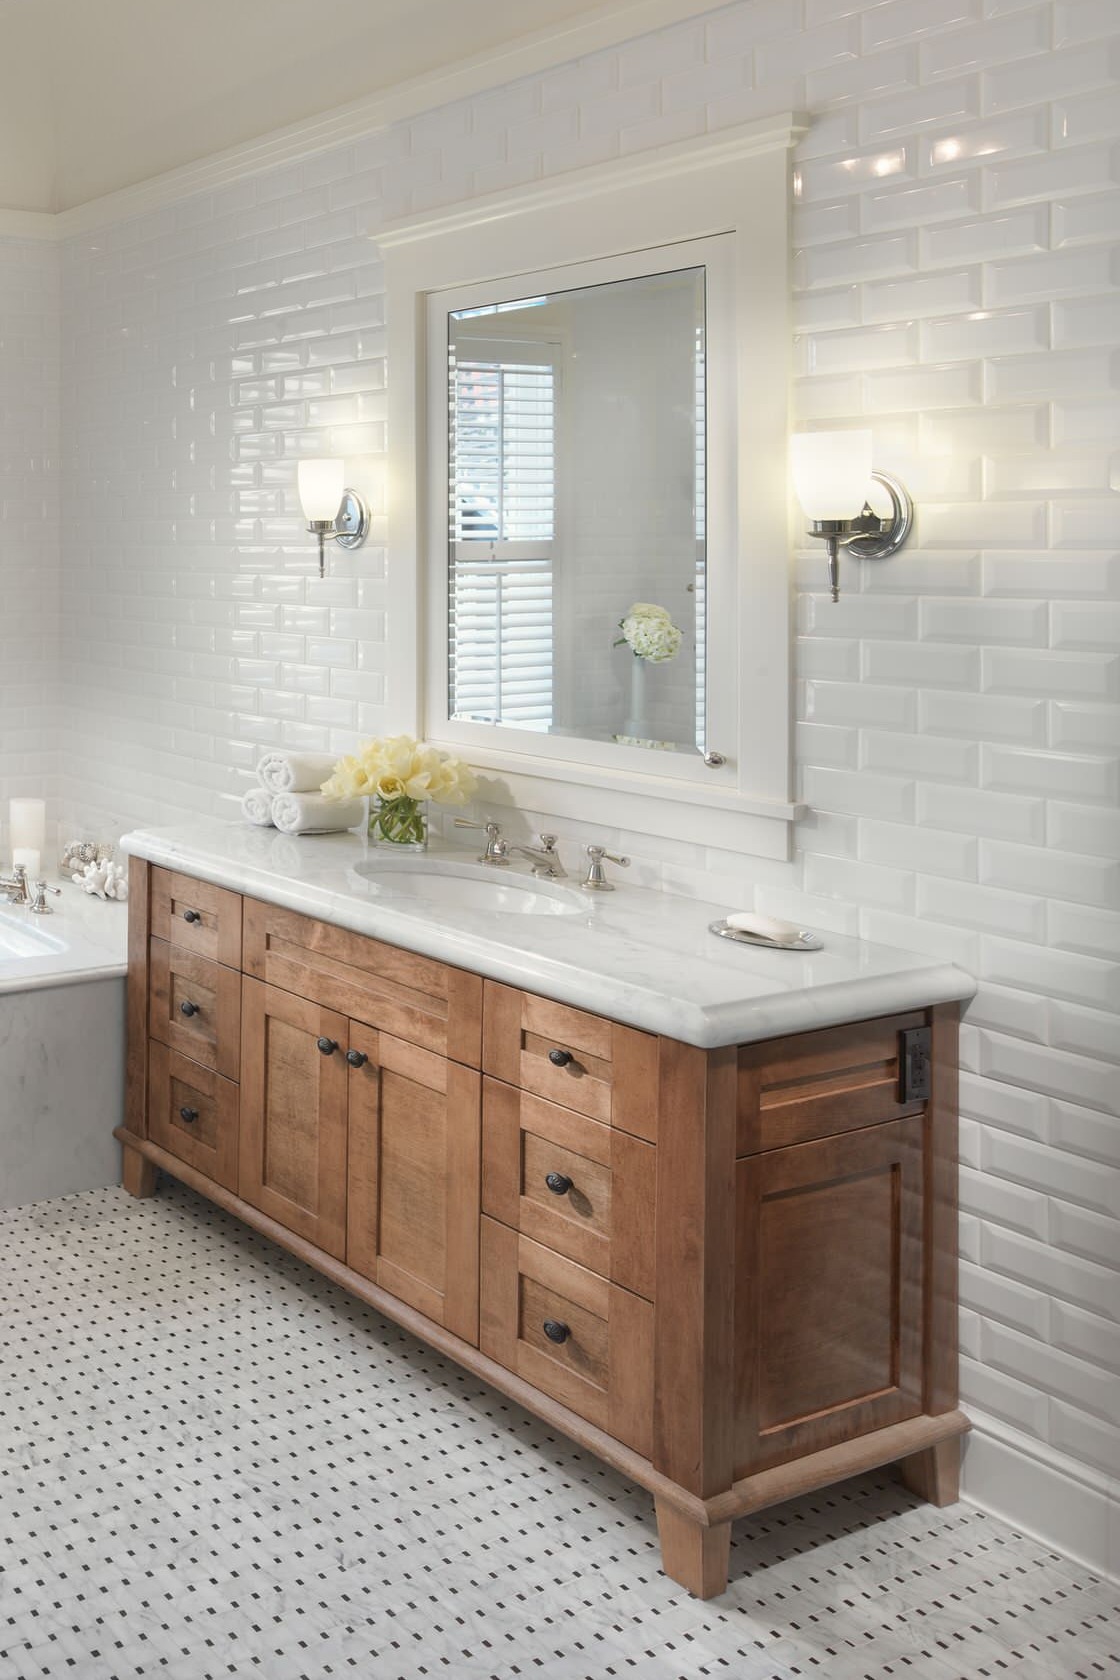 White Quartz Countertops Subway Style Wall Tiles Mosaic Floor Oak Vanity Cabinets